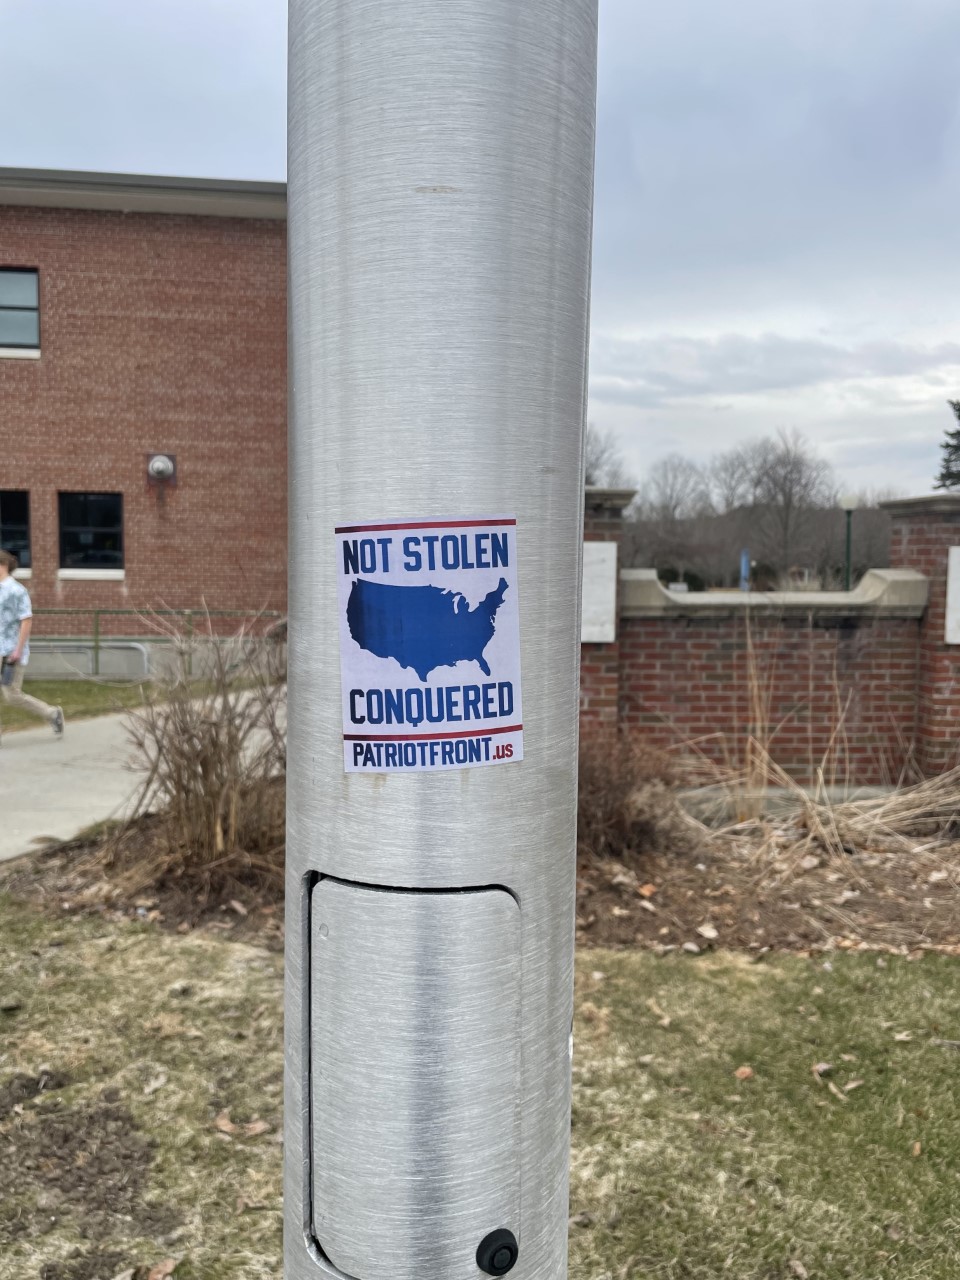 White supremacist stickers found on campus